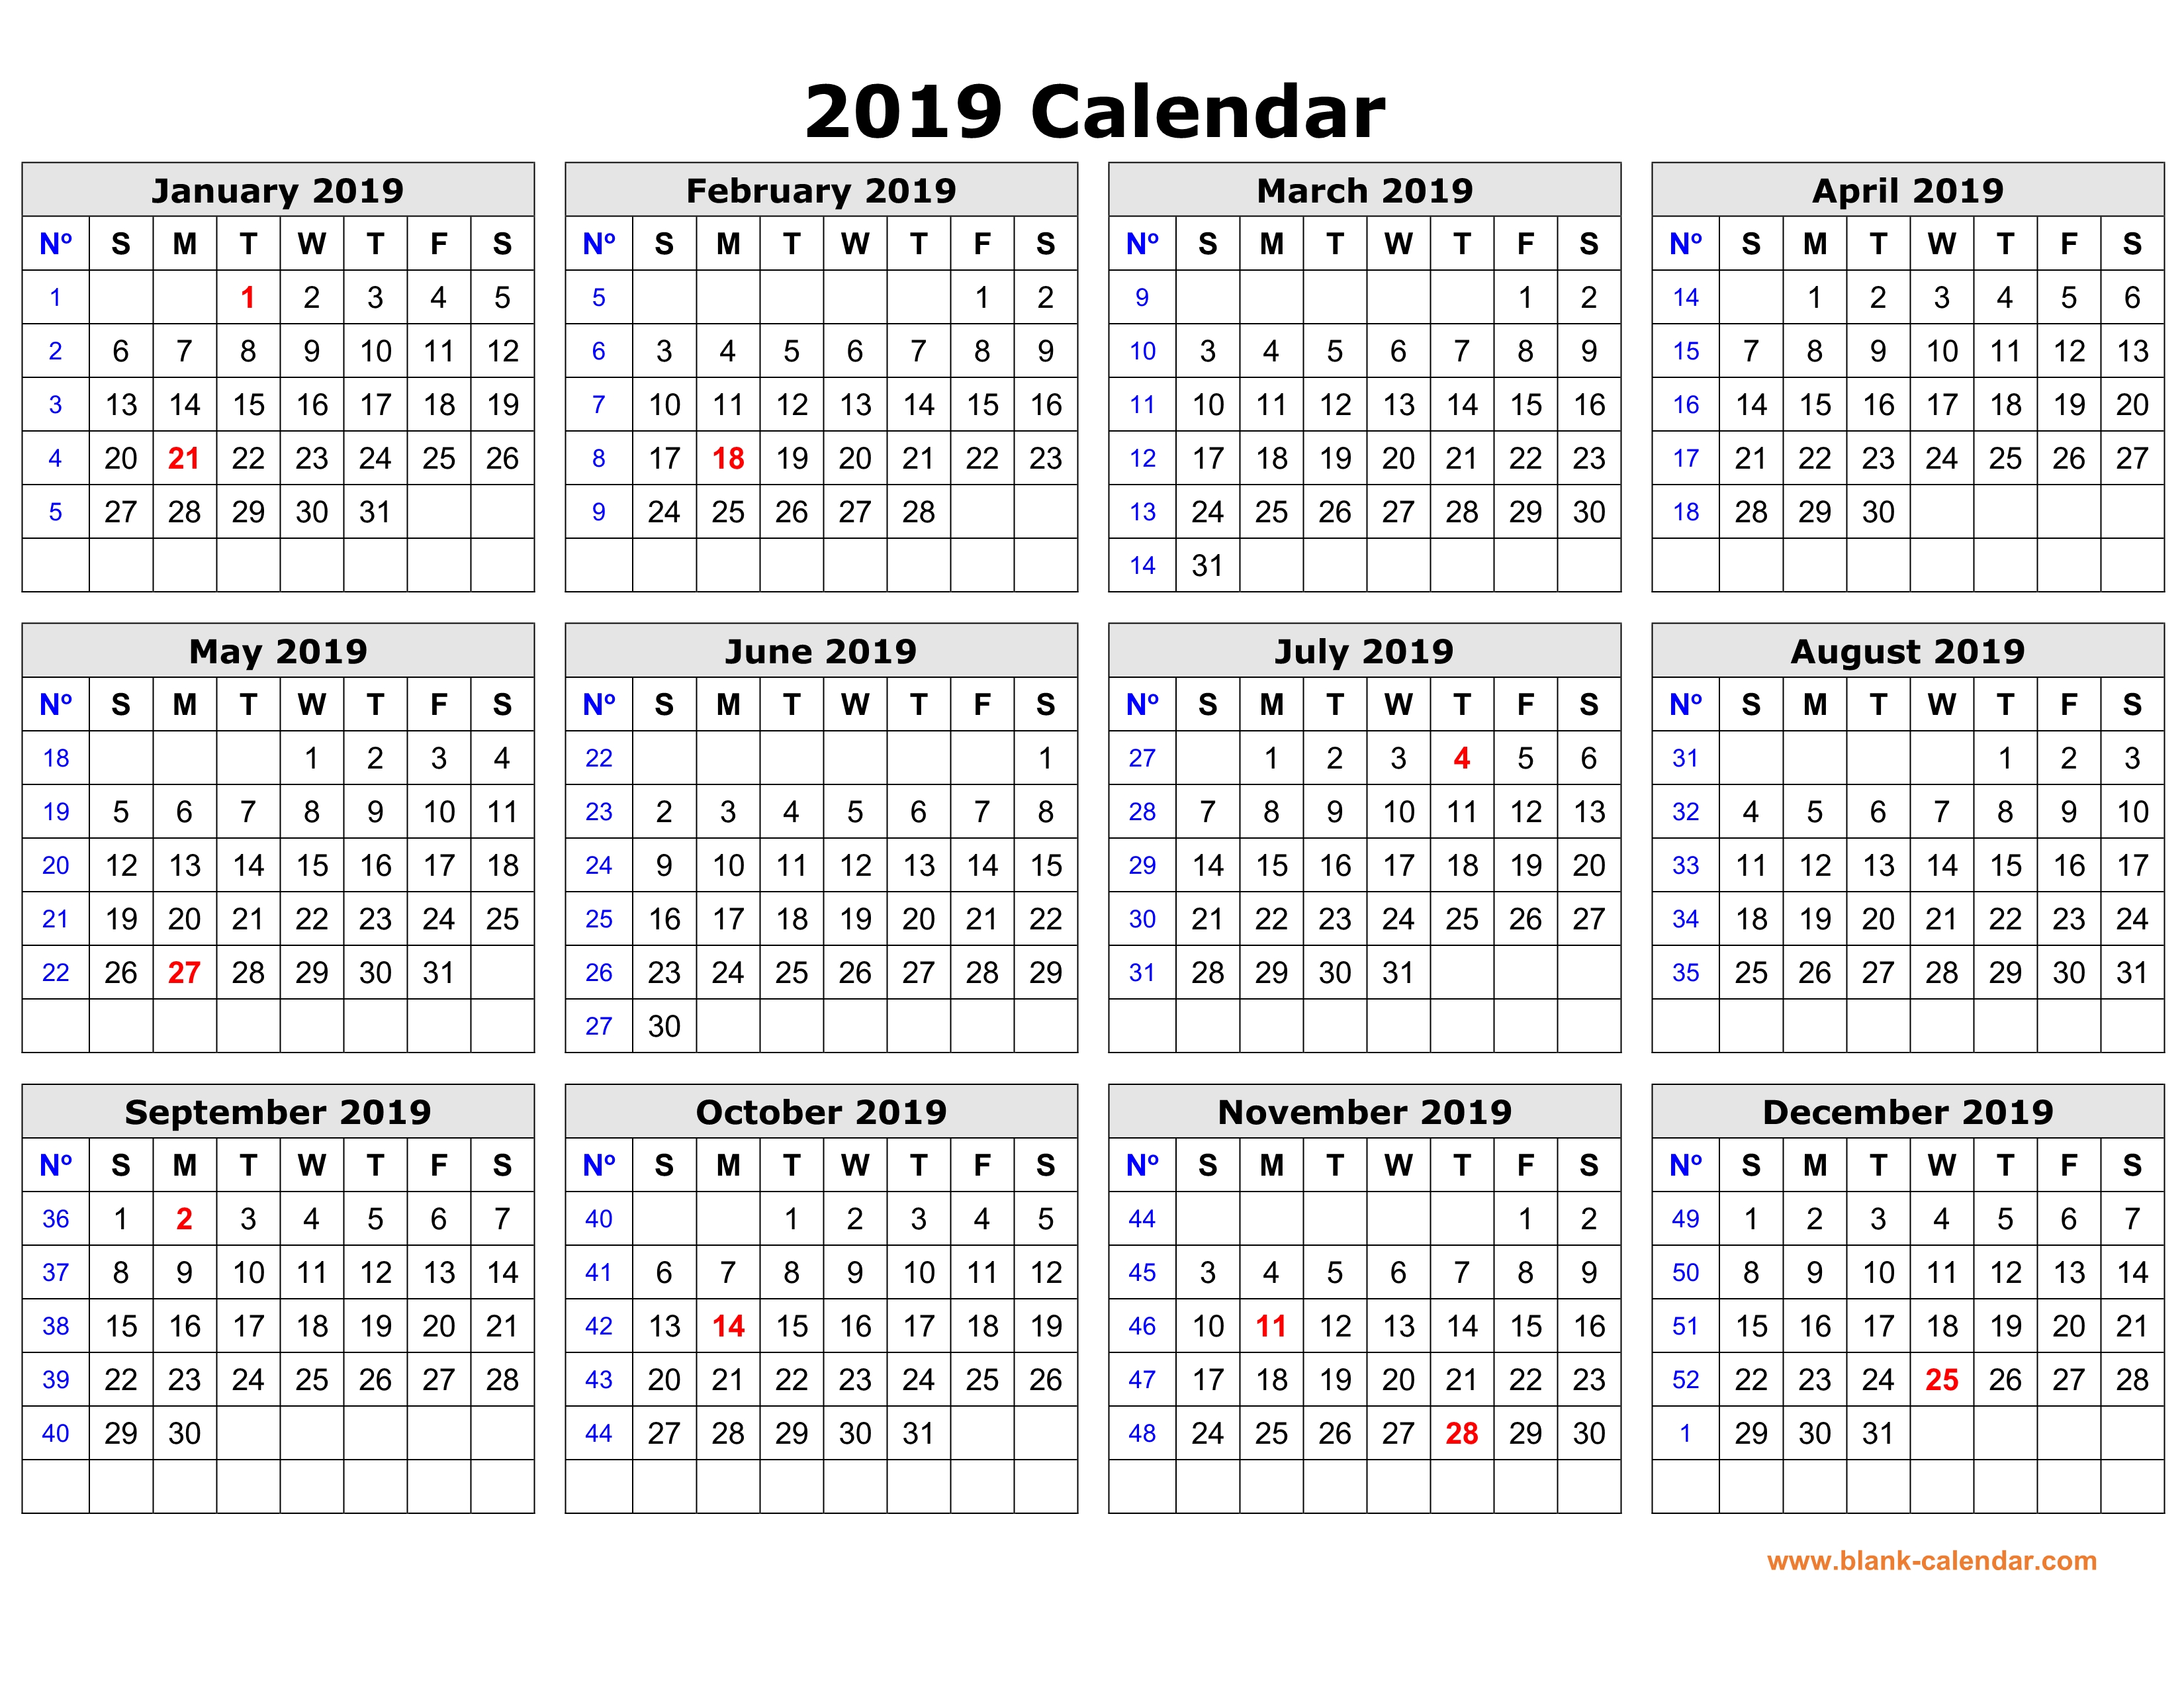 2018 2019 2020 Yearly Calendar Printable